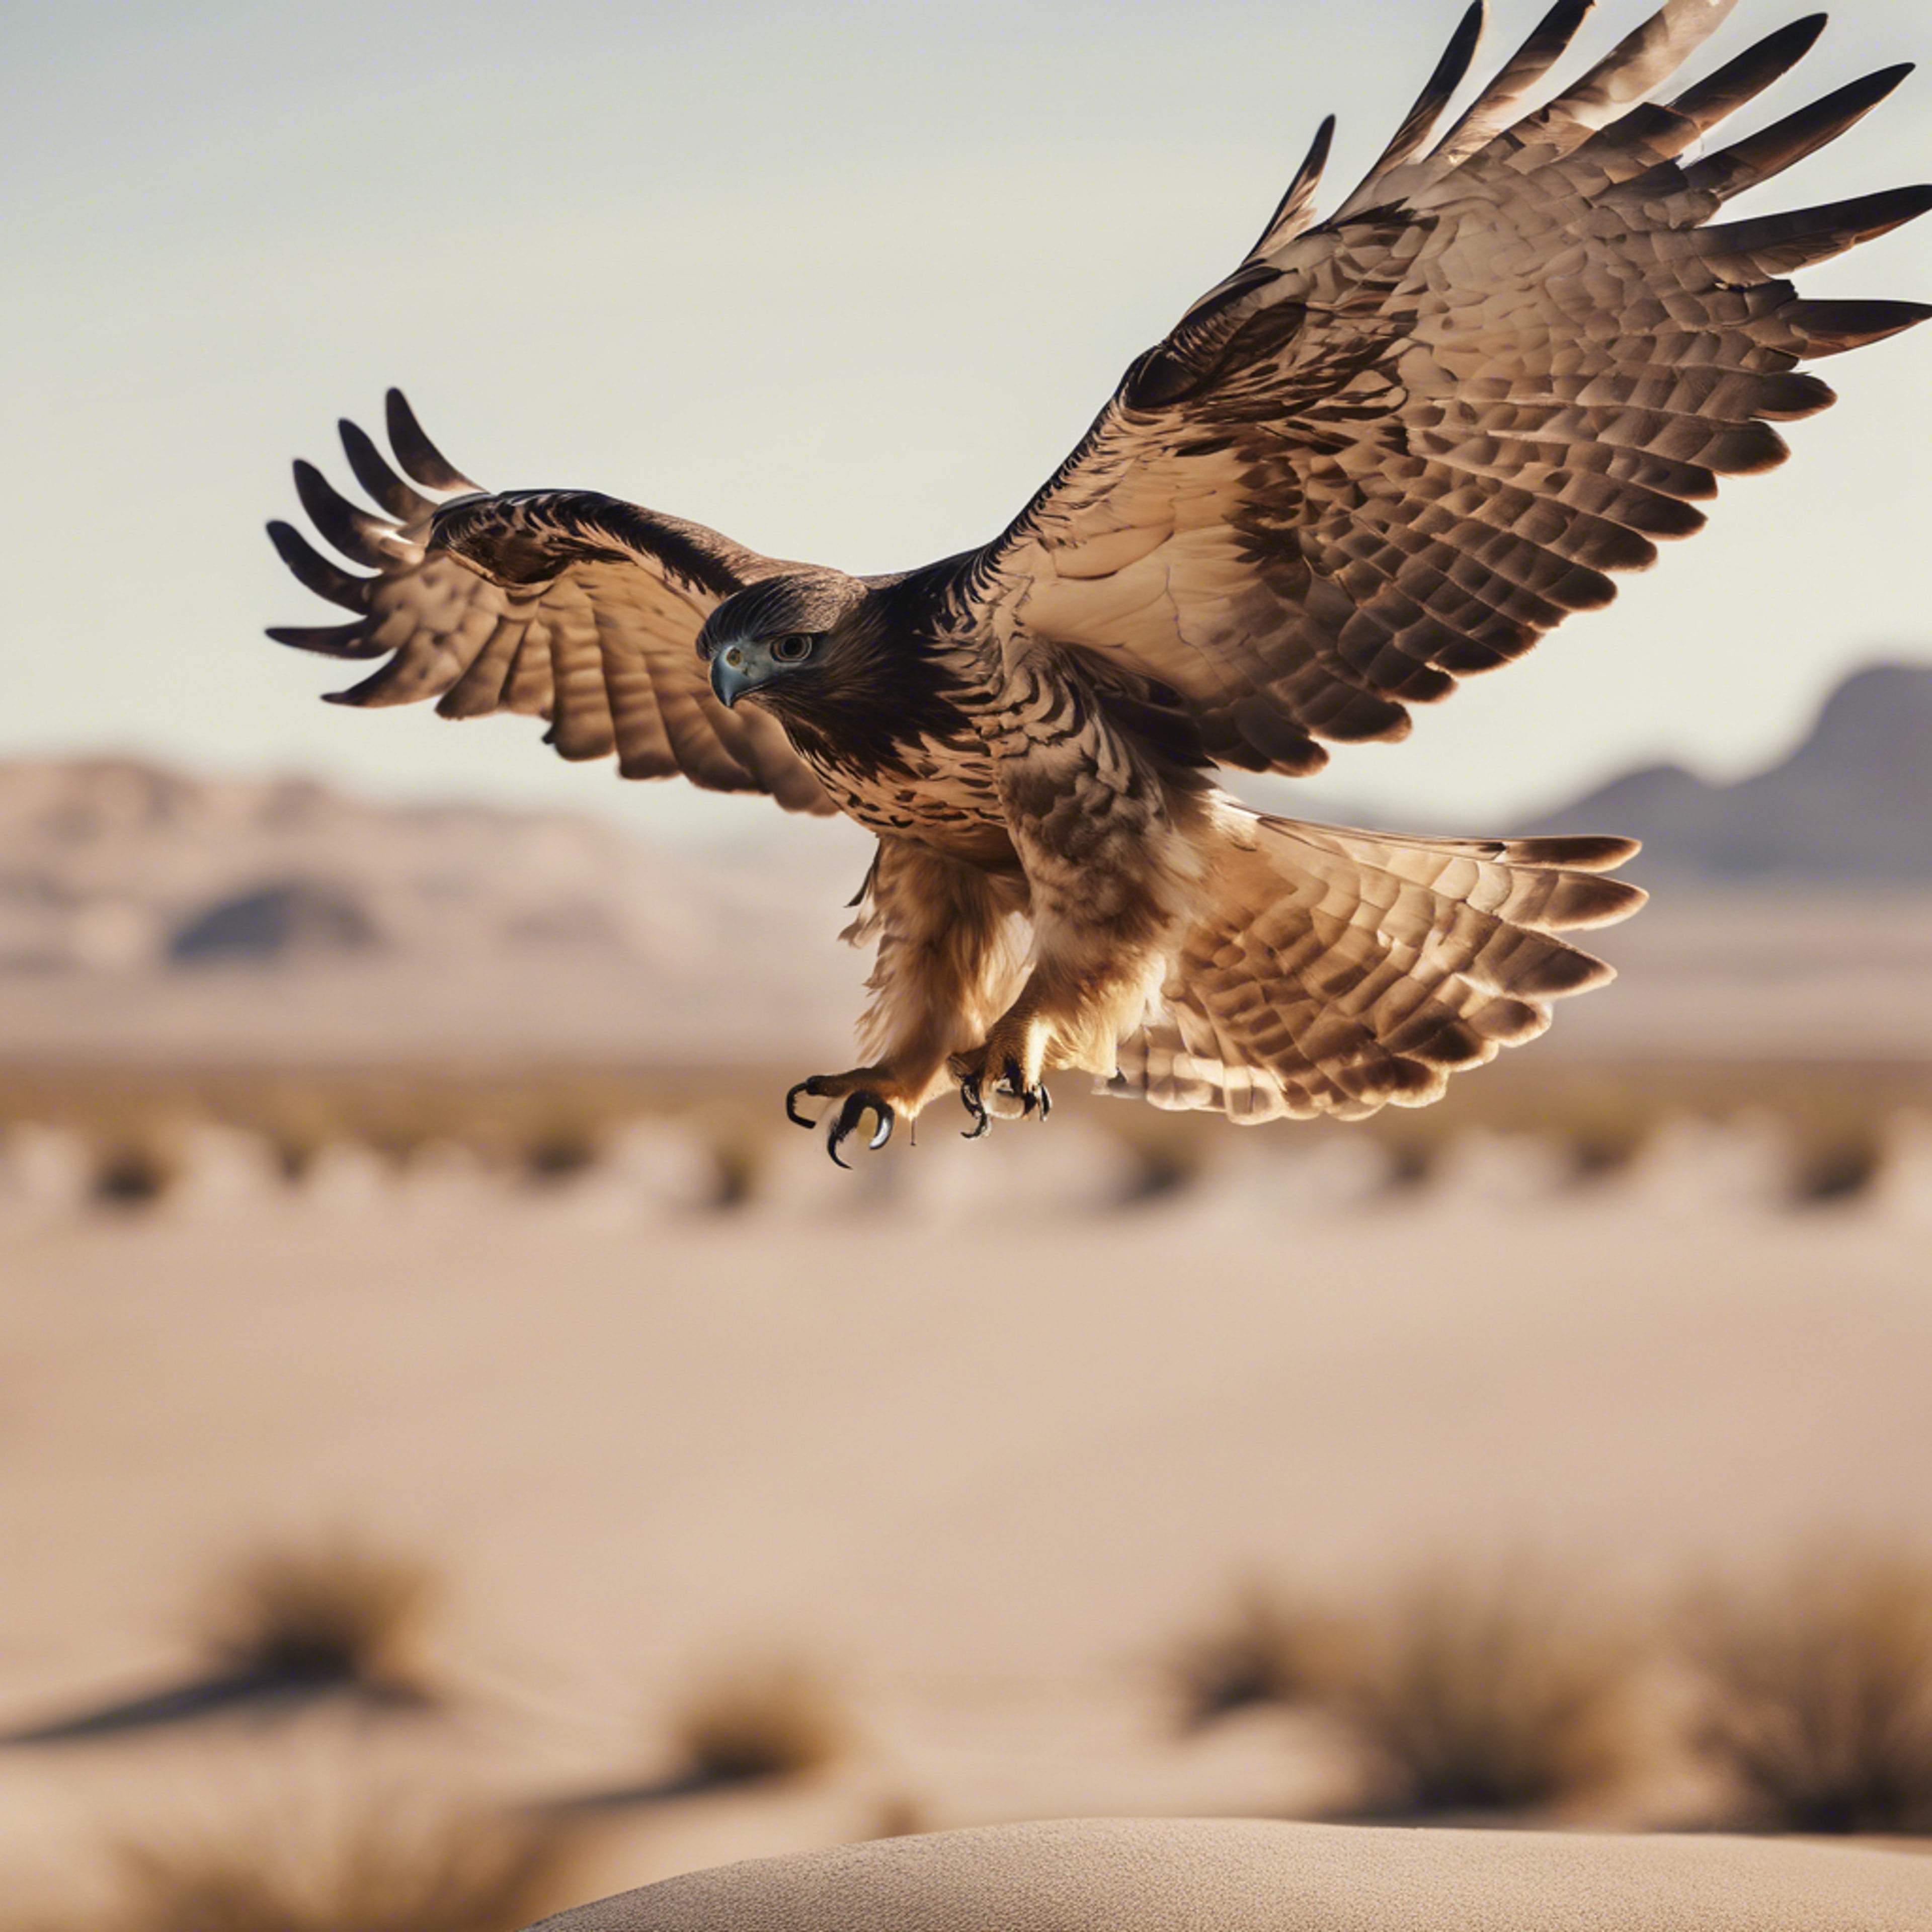 A hawk taking flight from its perch in a cool beige desert landscape. 벽지[f9770860966b45f09558]